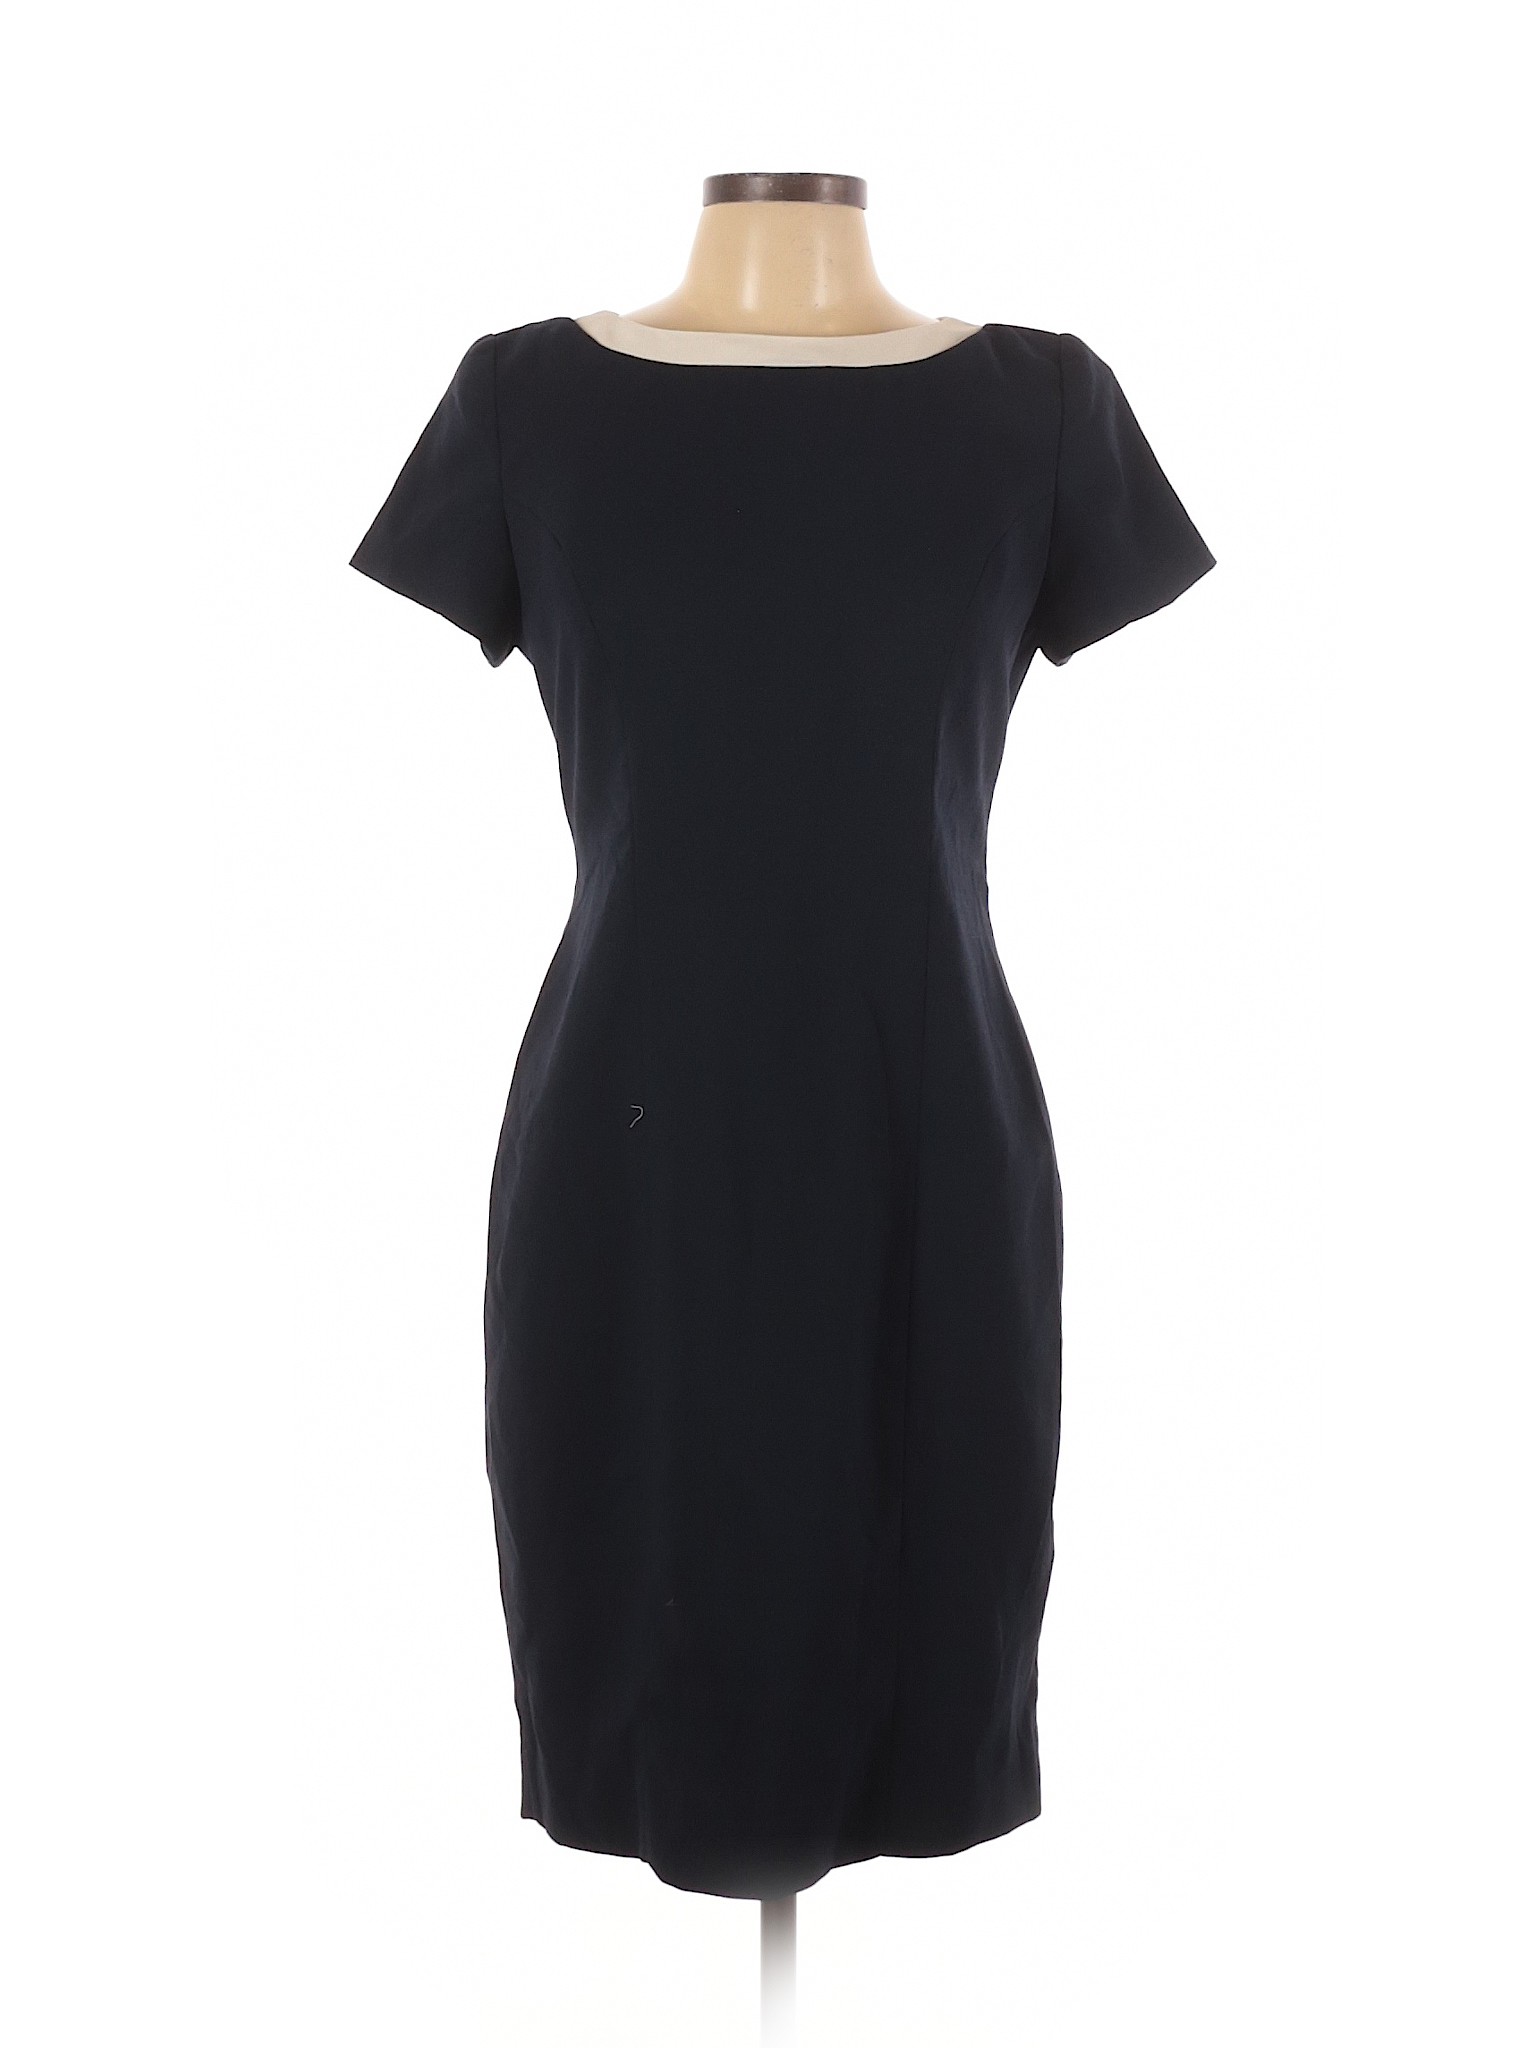 Liz Claiborne Women Black Casual Dress 10 | eBay